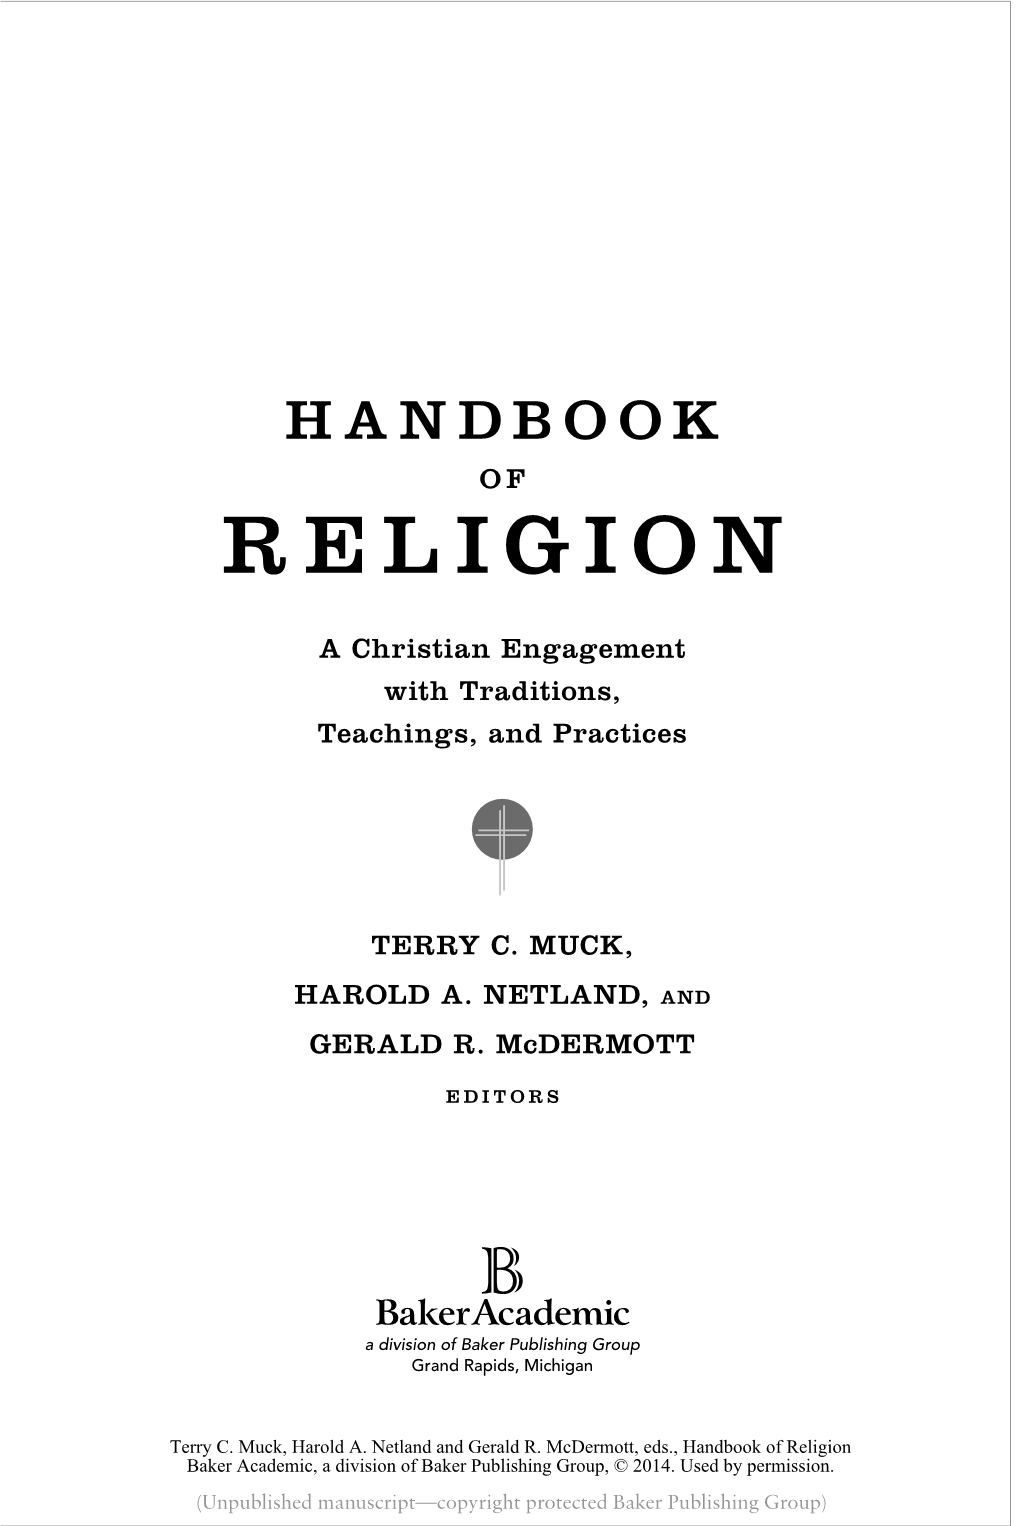 Handbook of Religion Baker Academic, a Division of Baker Publishing Group, © 2014